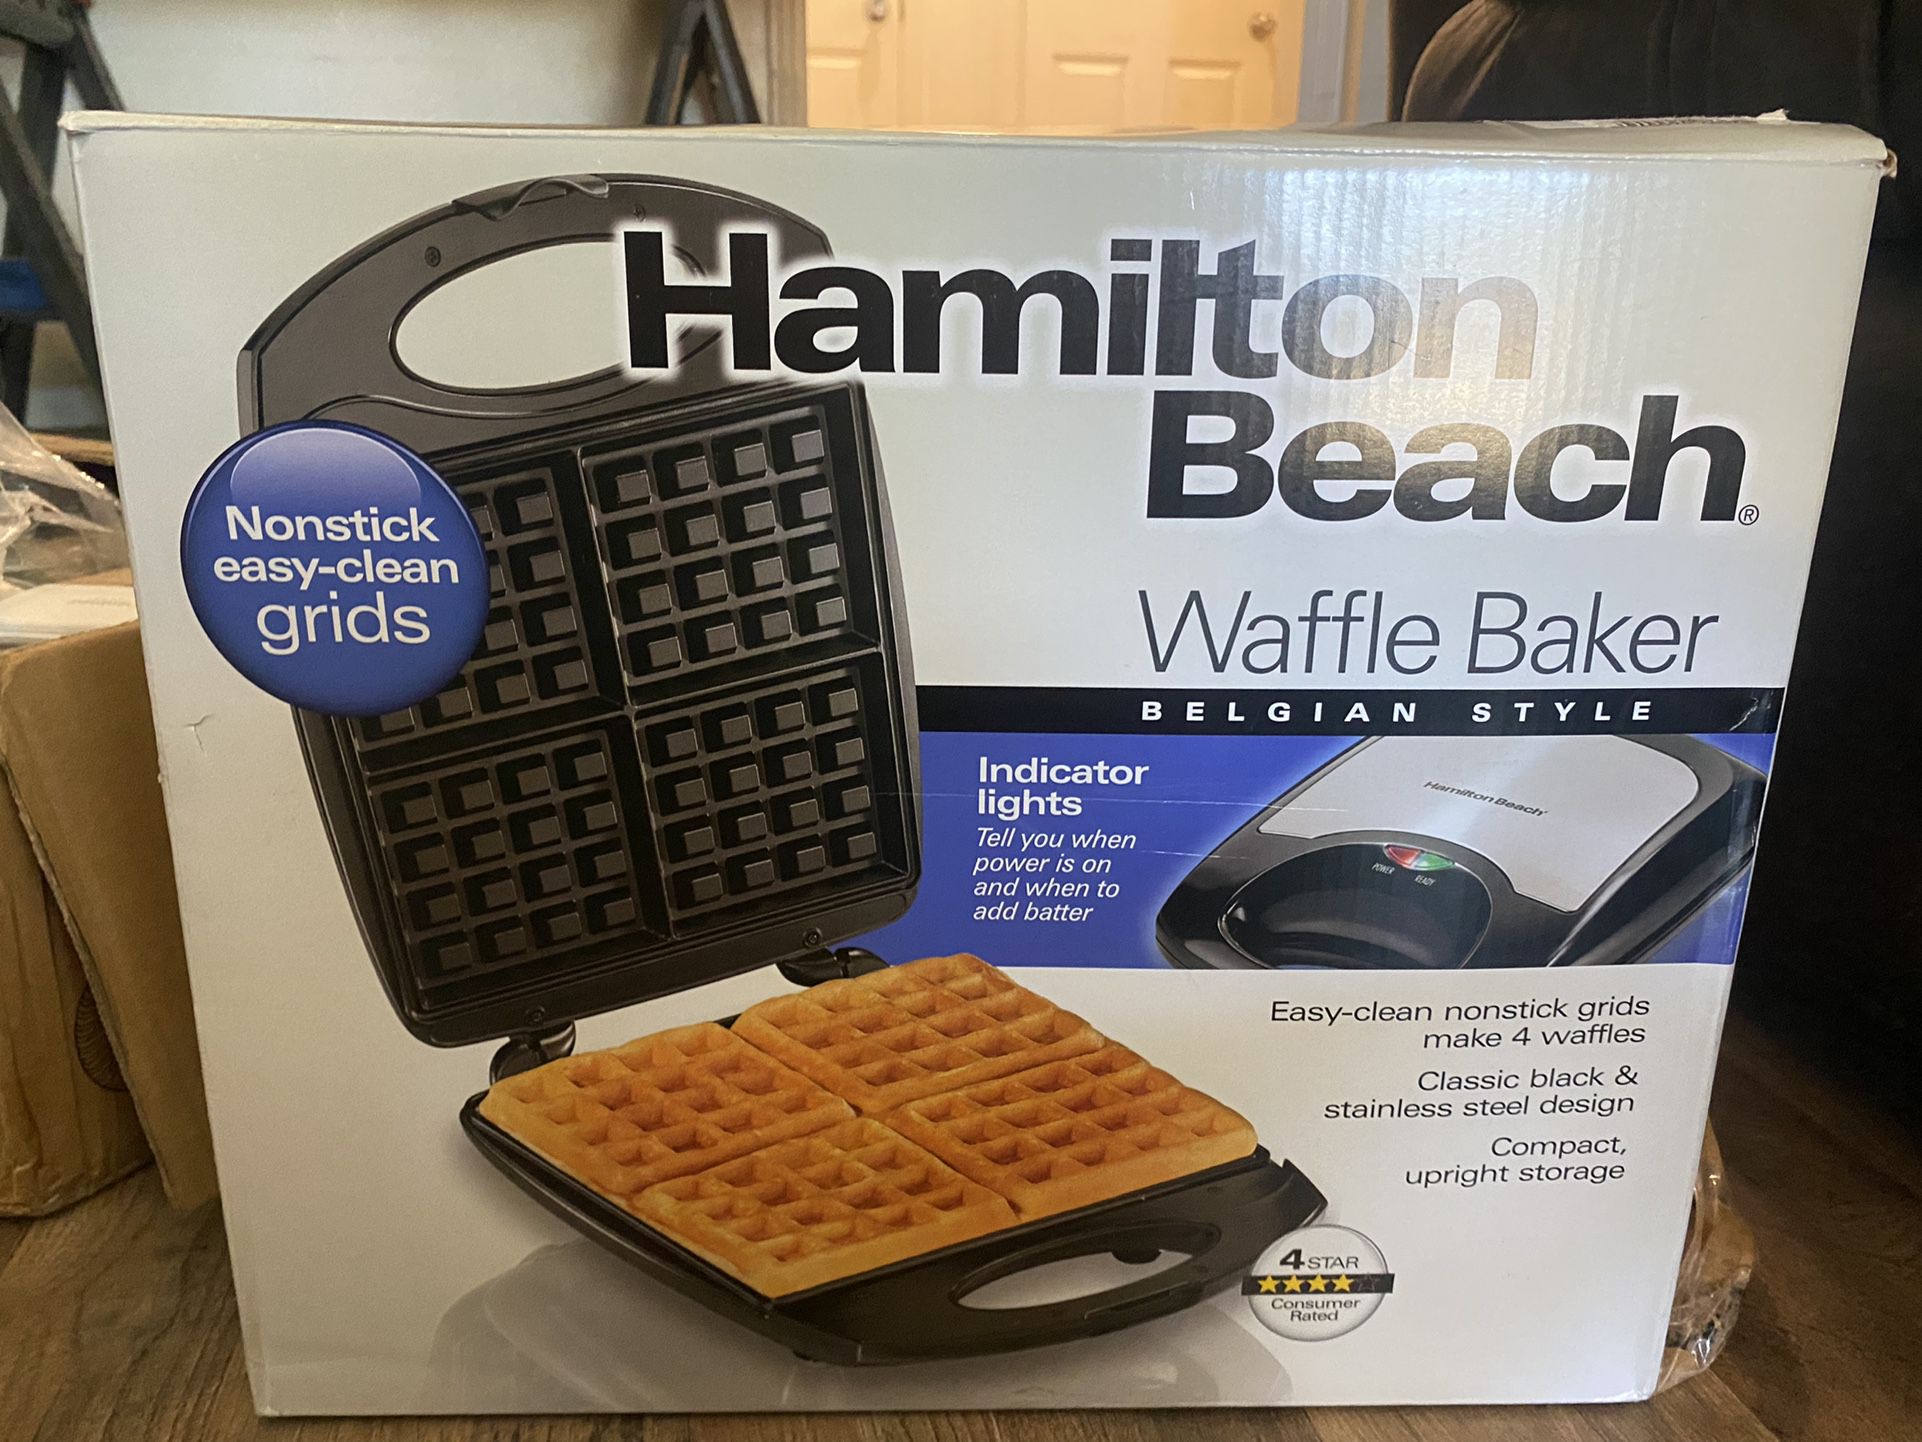 Hamilton Beach Waffle Baker, Belgian Style, Stainless Steel